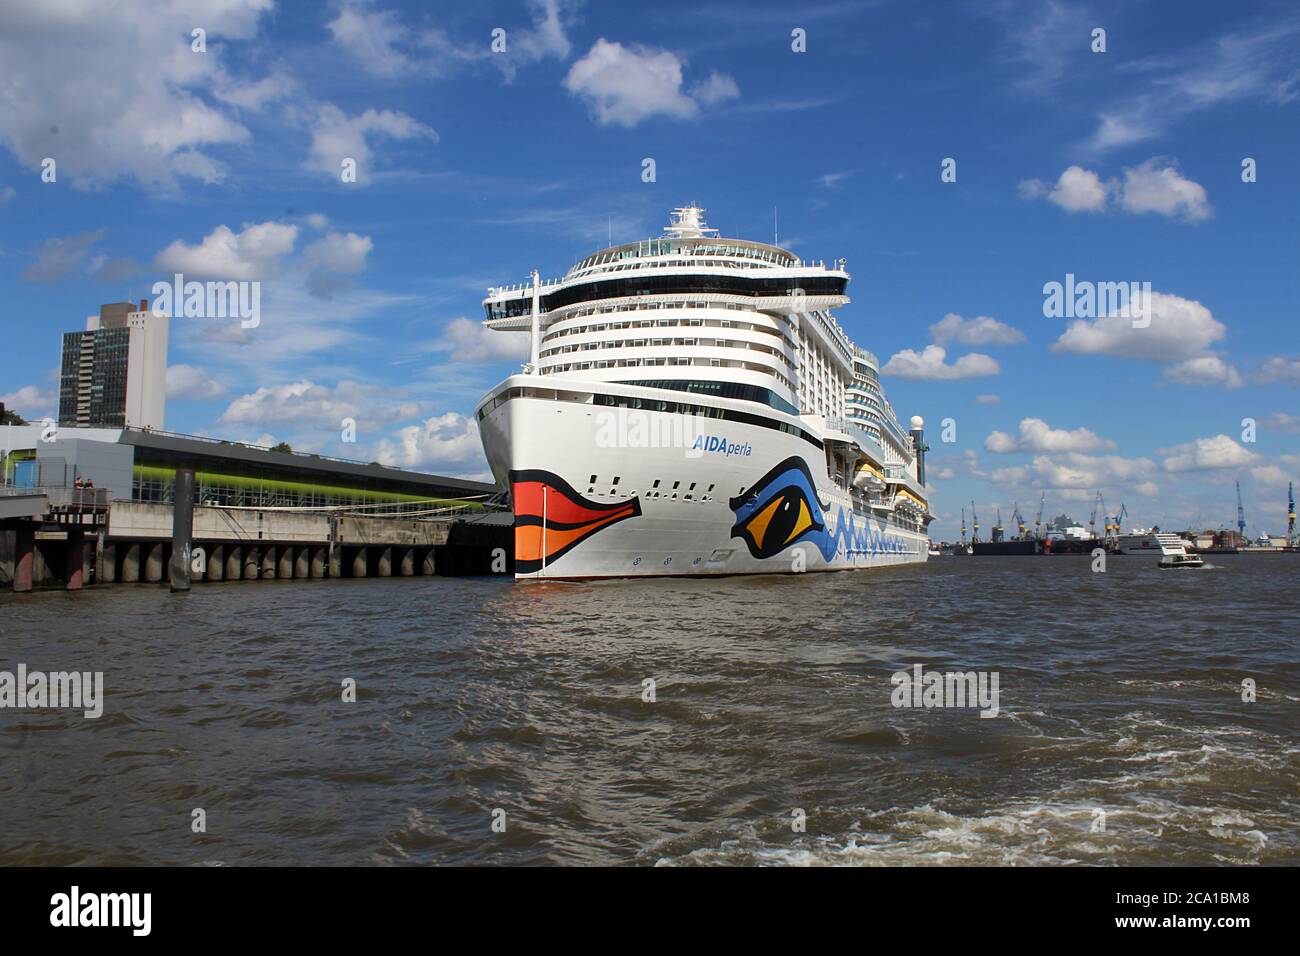 Hamburg, Germany - 28 July 2020: The cruise ship of AIDA Cruises, AIDAperla, at the Port of Hamburg on the river Elbe. Stock Photo